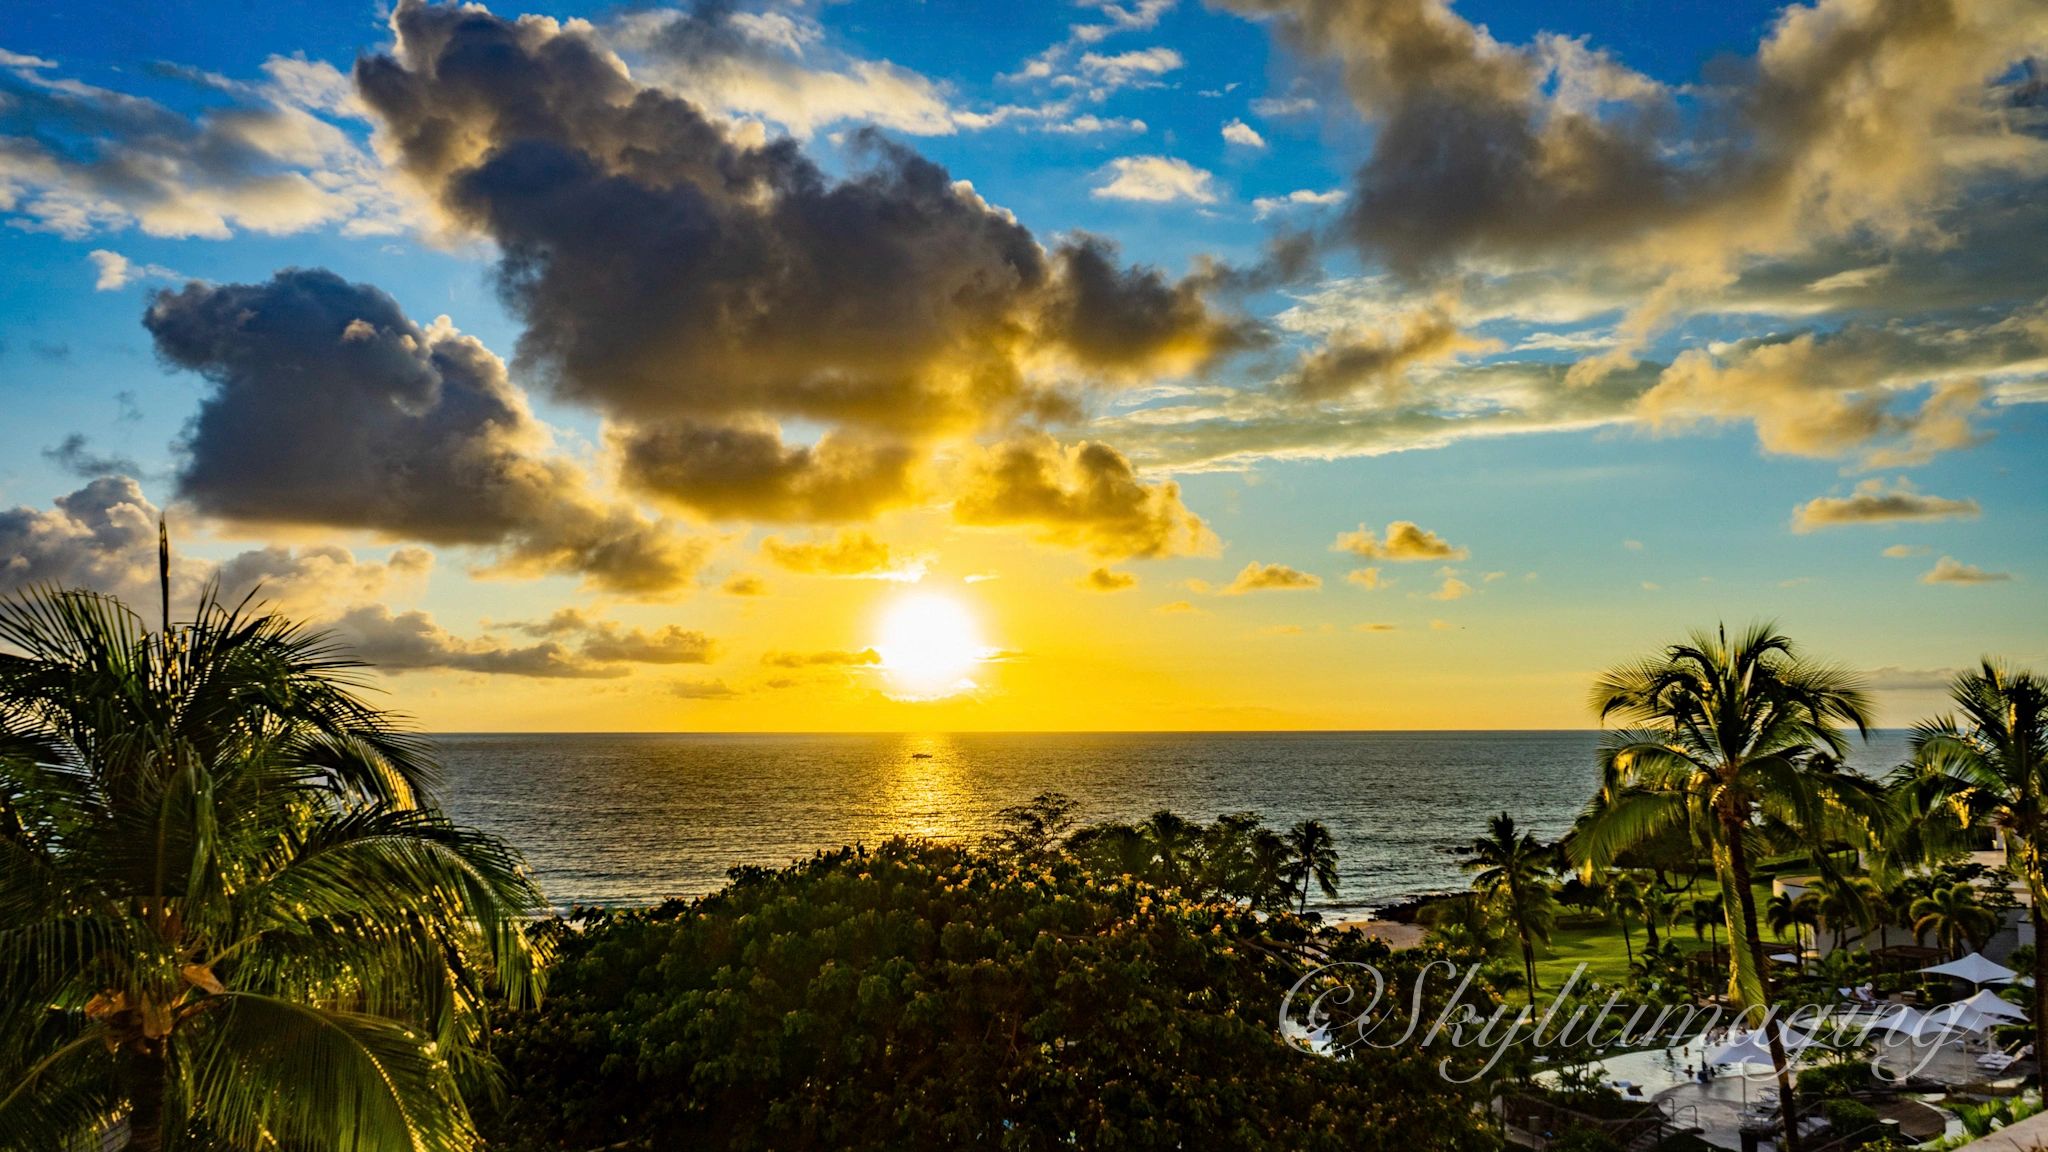 Sunset, Hawaiian, resort, pacific, ocean, clouds, fishing, boat, trees, nature, blue, sky, Hawaii